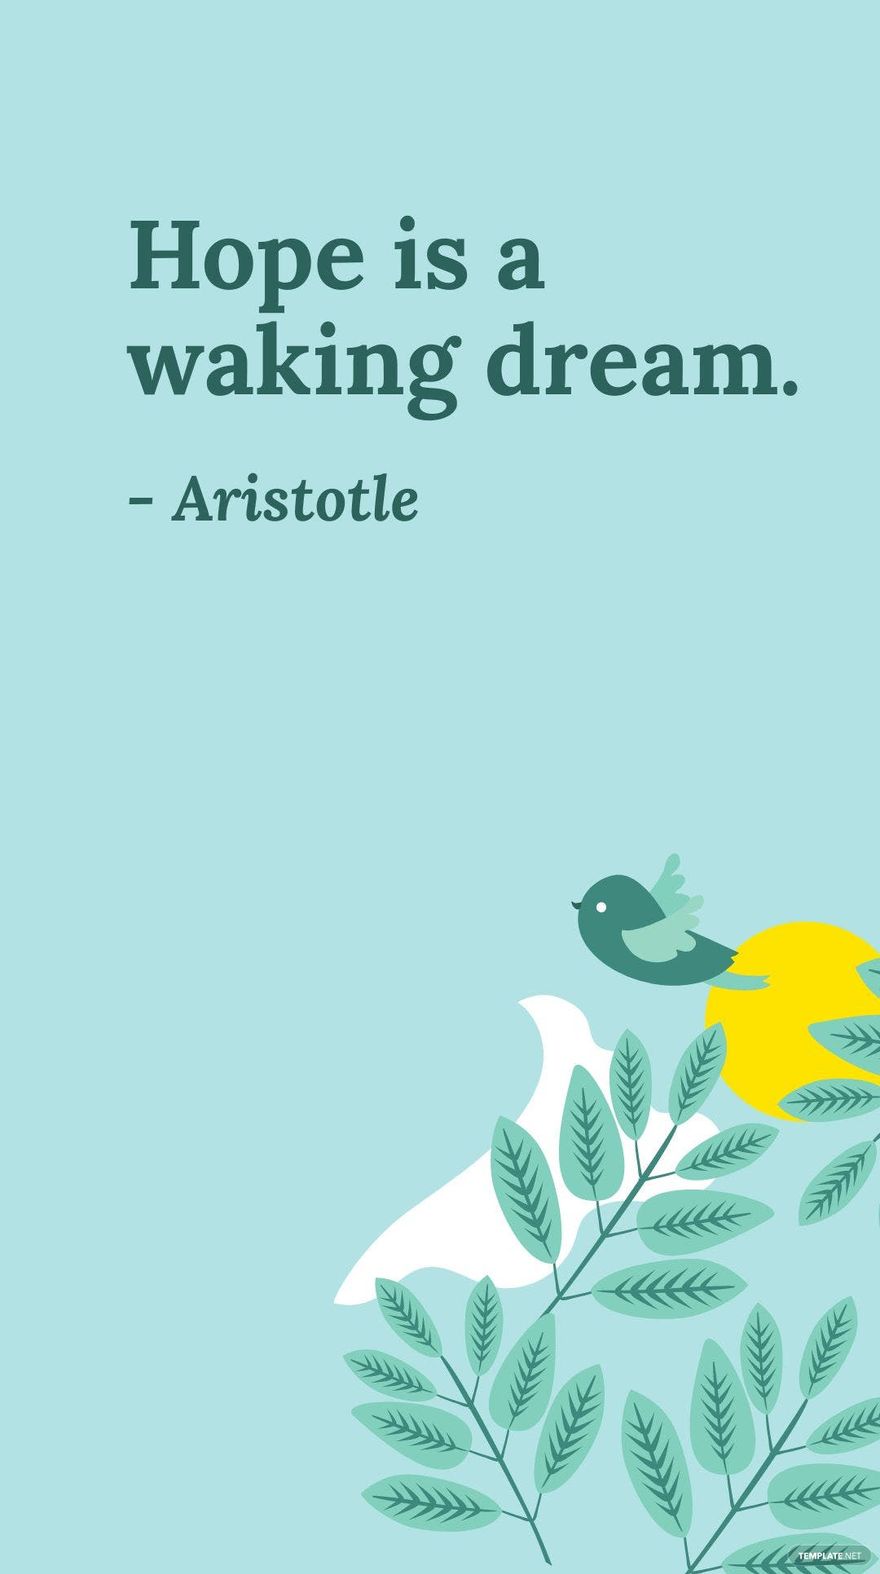 Free Aristotle - Hope is a waking dream. in JPG